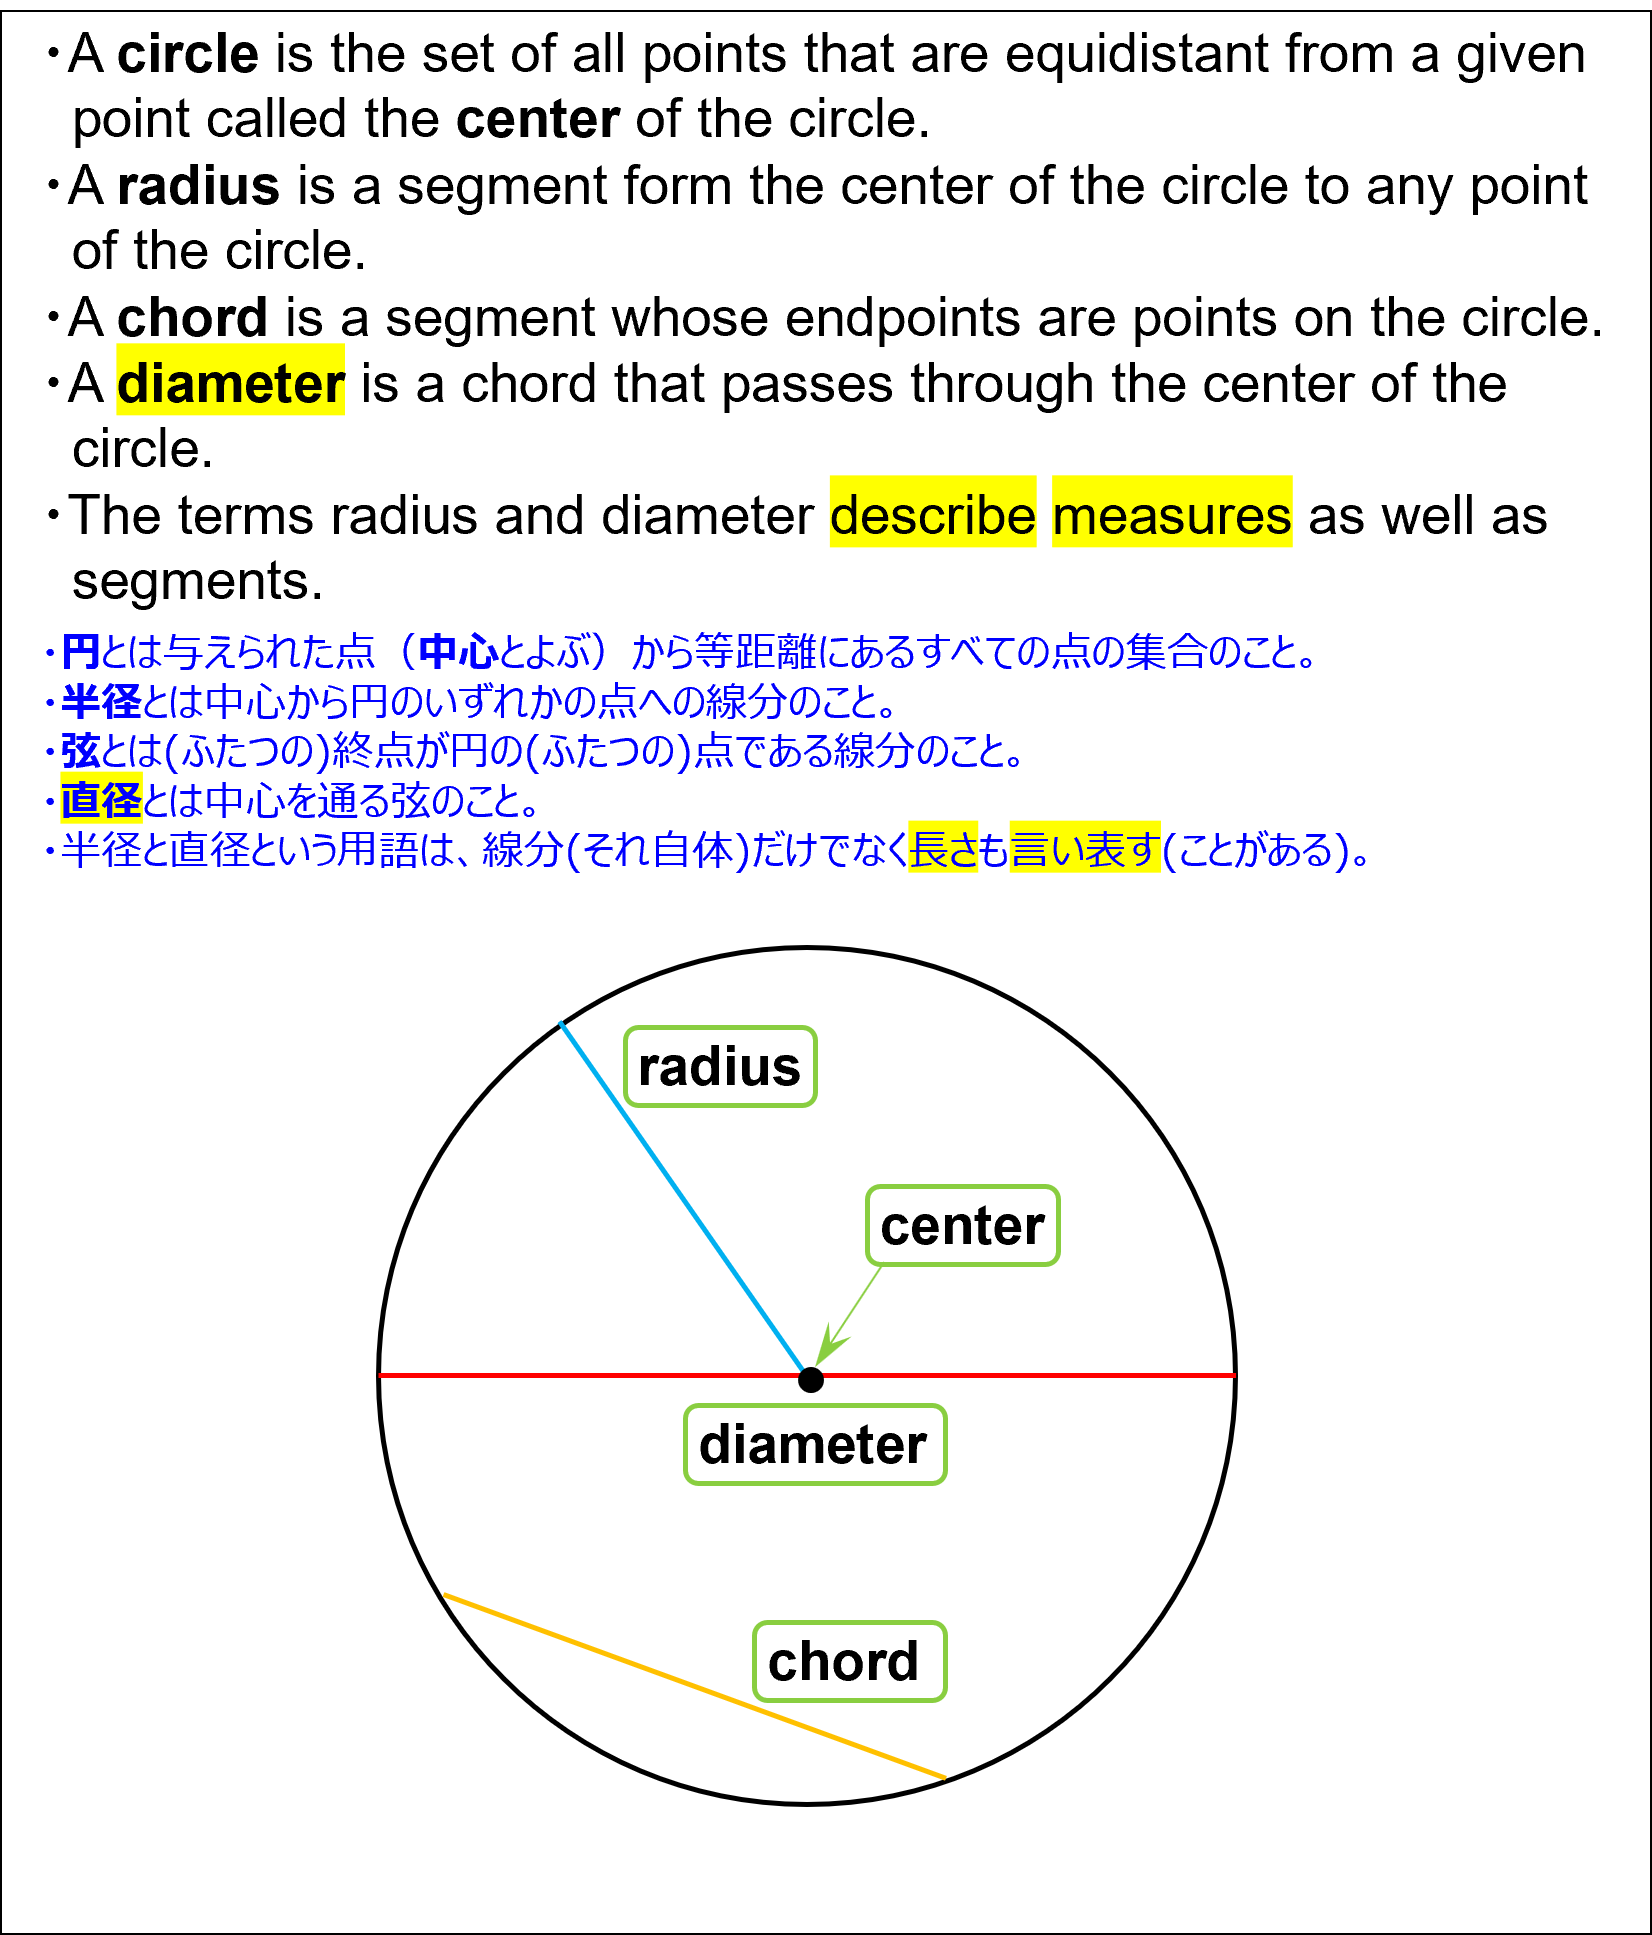 Definition of circle, center, radius, chord, and diameter